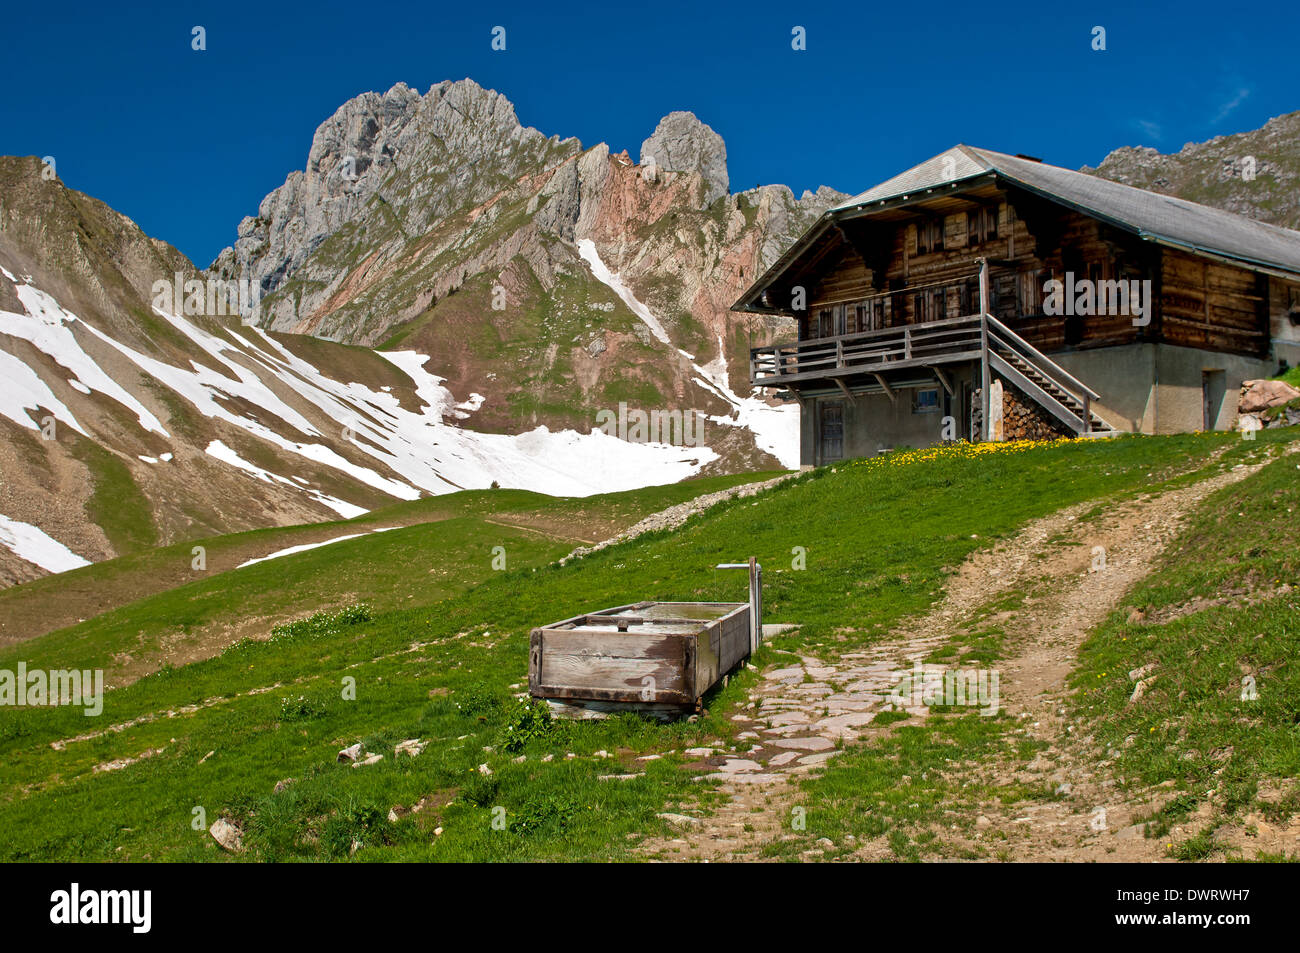 Alp cabin at the foot of the Dent de Ruth peak in the Gastlosen limestone mountain range, Abländschen, Switzerland Stock Photo